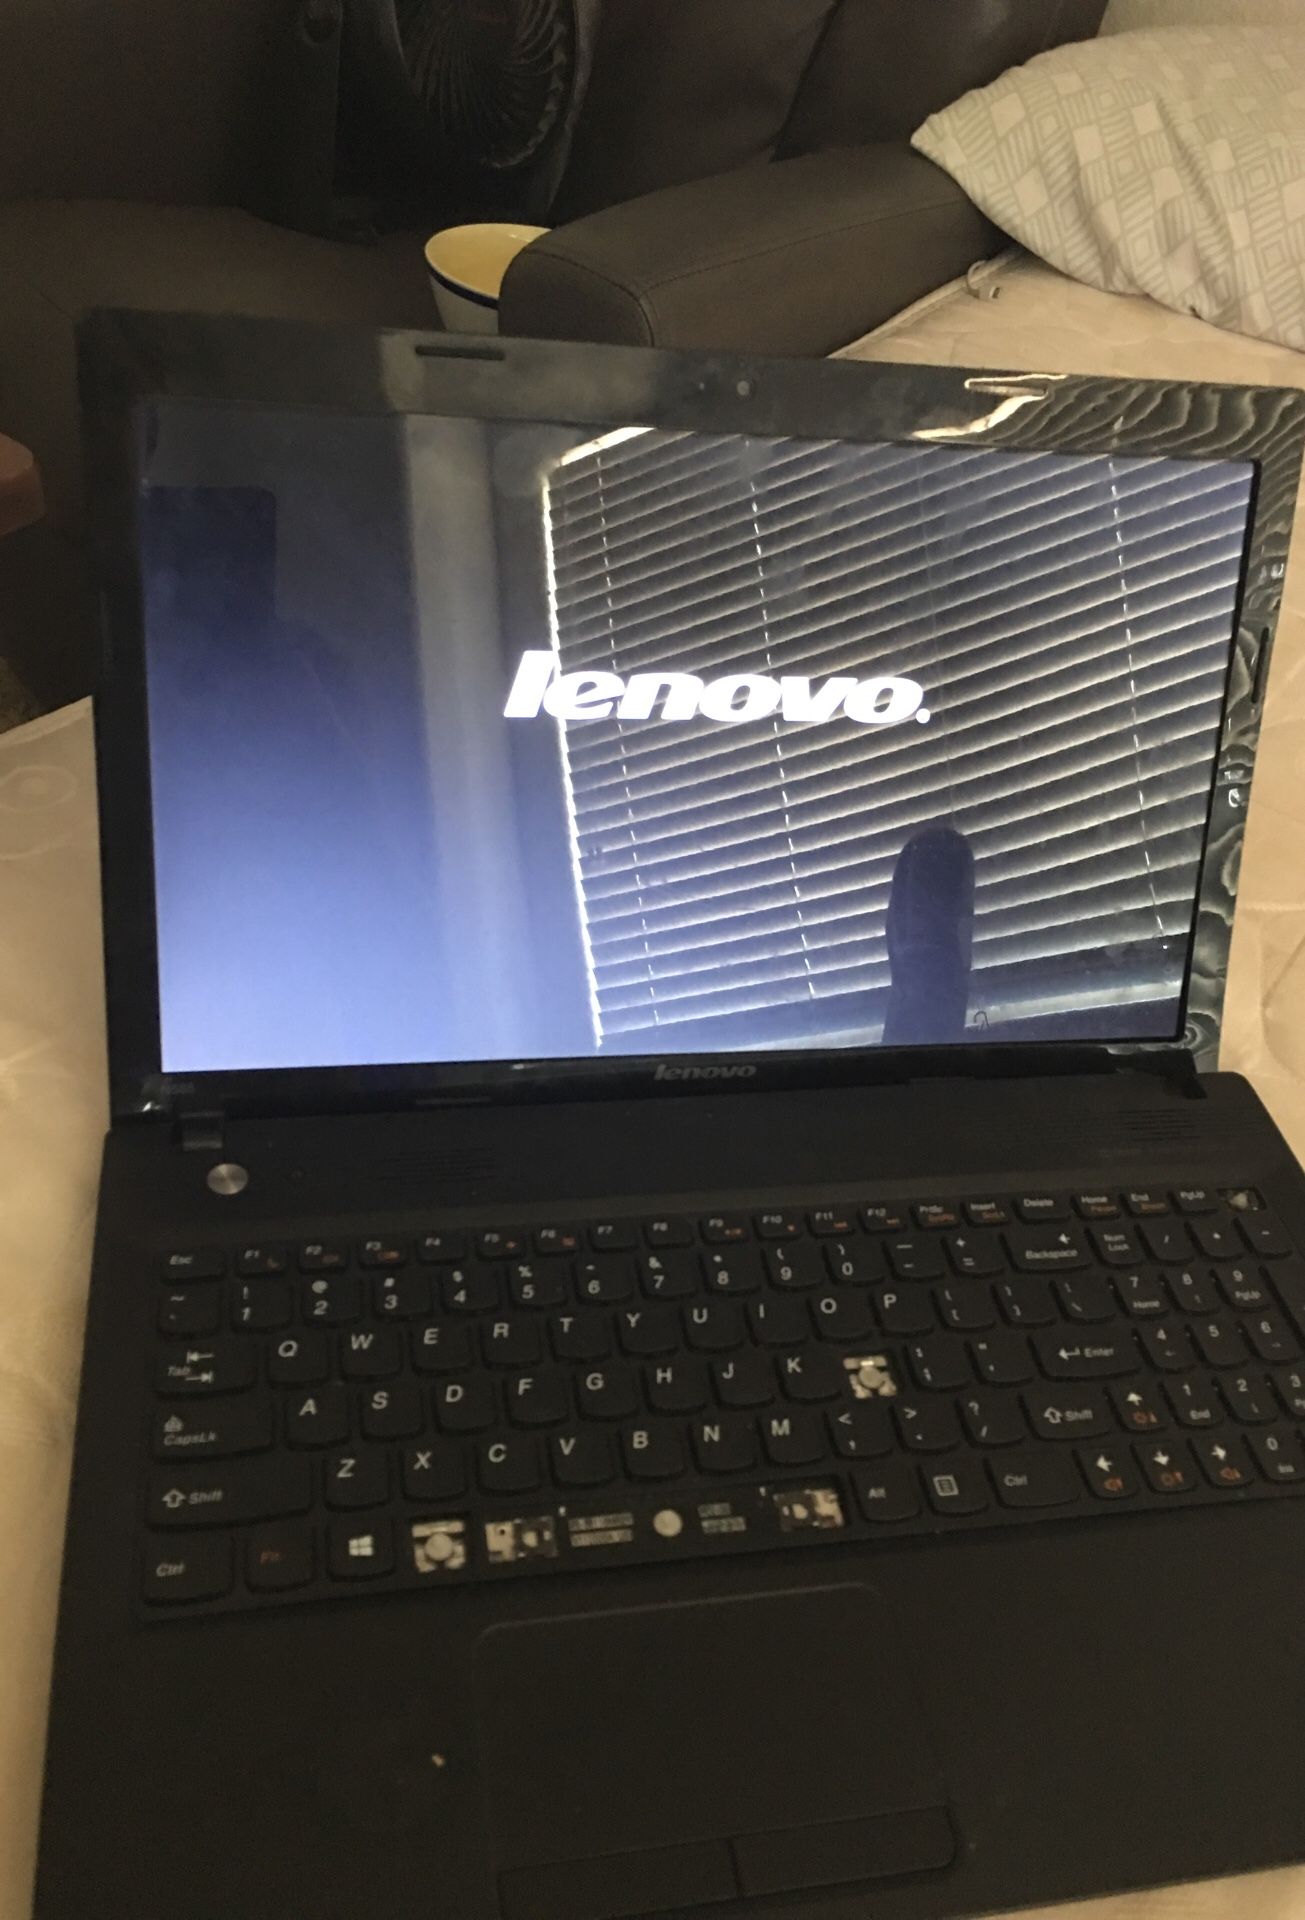 Lenovo laptop BROKEN KEYBOARD AND SCREEN SEPARATED